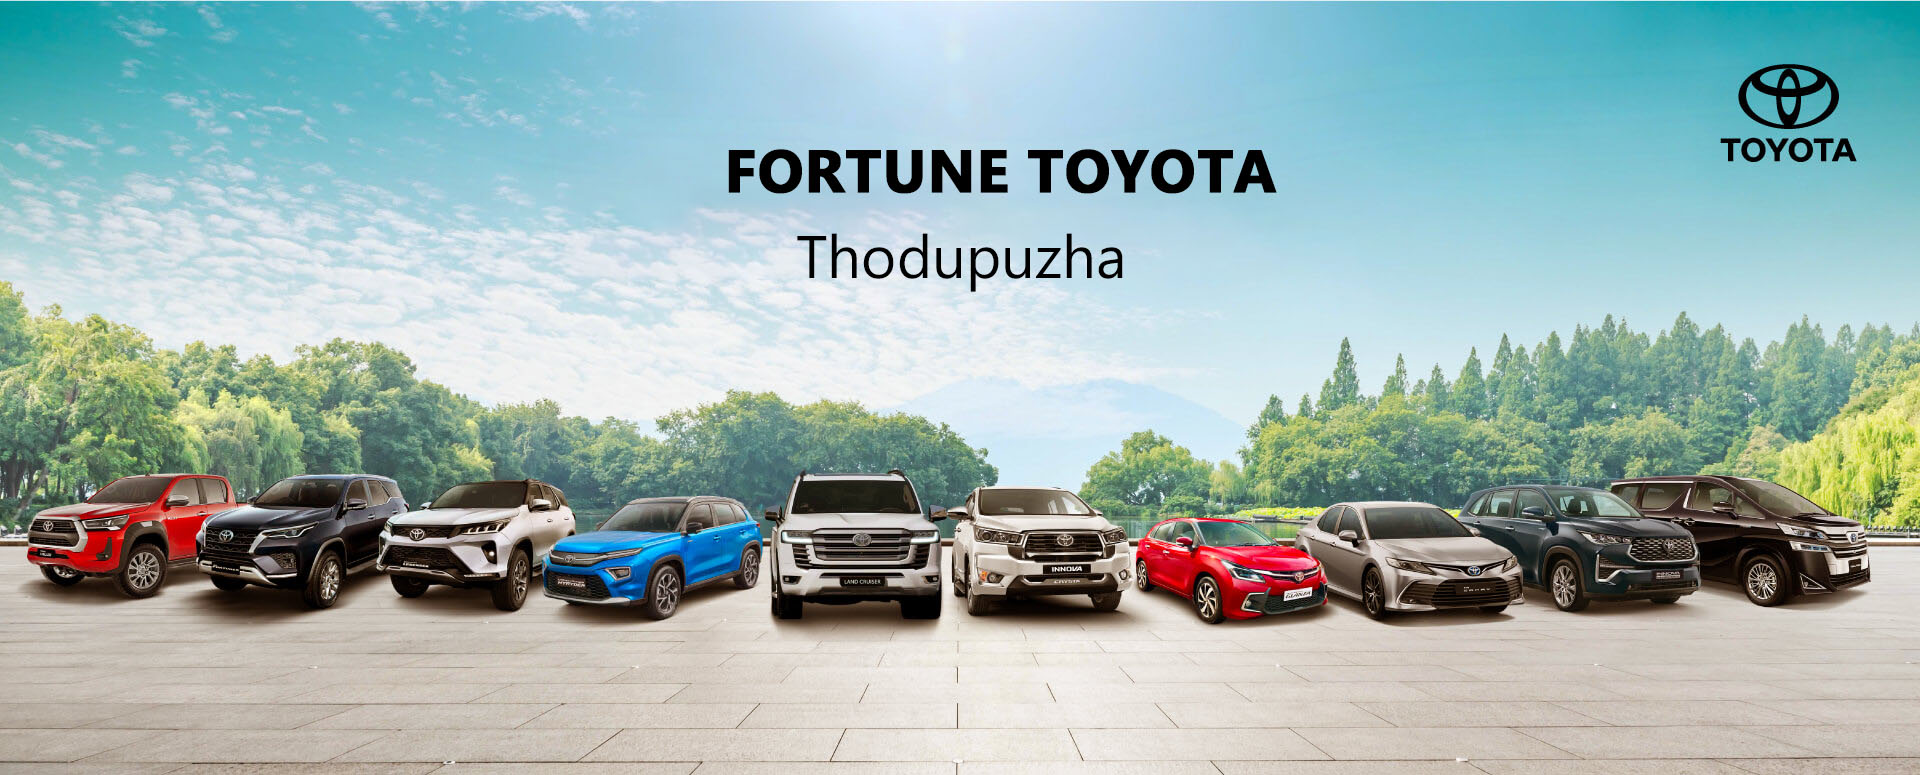 Fortune Toyota